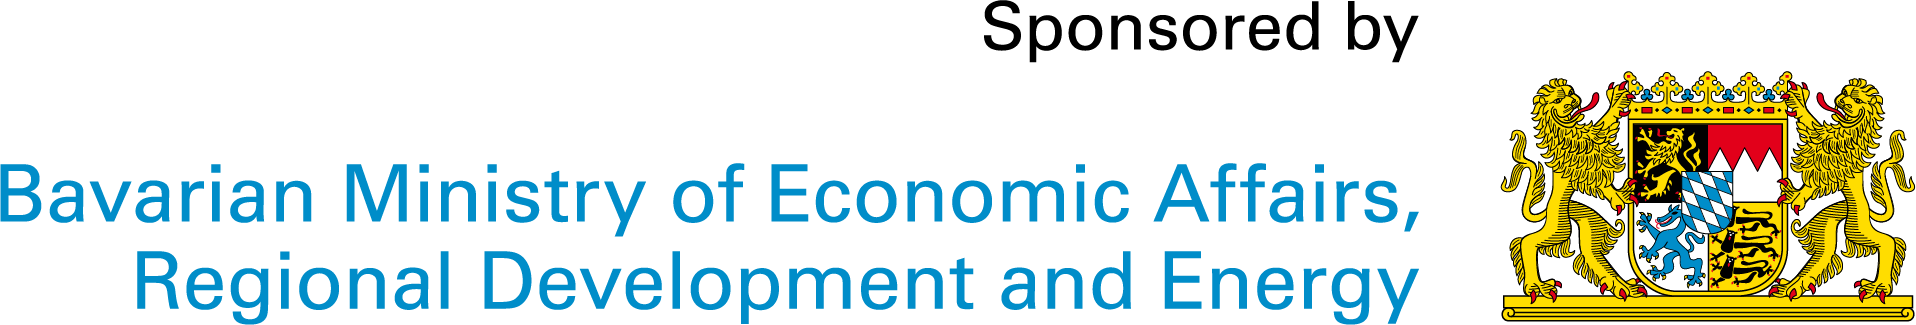 Bavarian Ministry of Economic Affairs, Regional Development and Energy